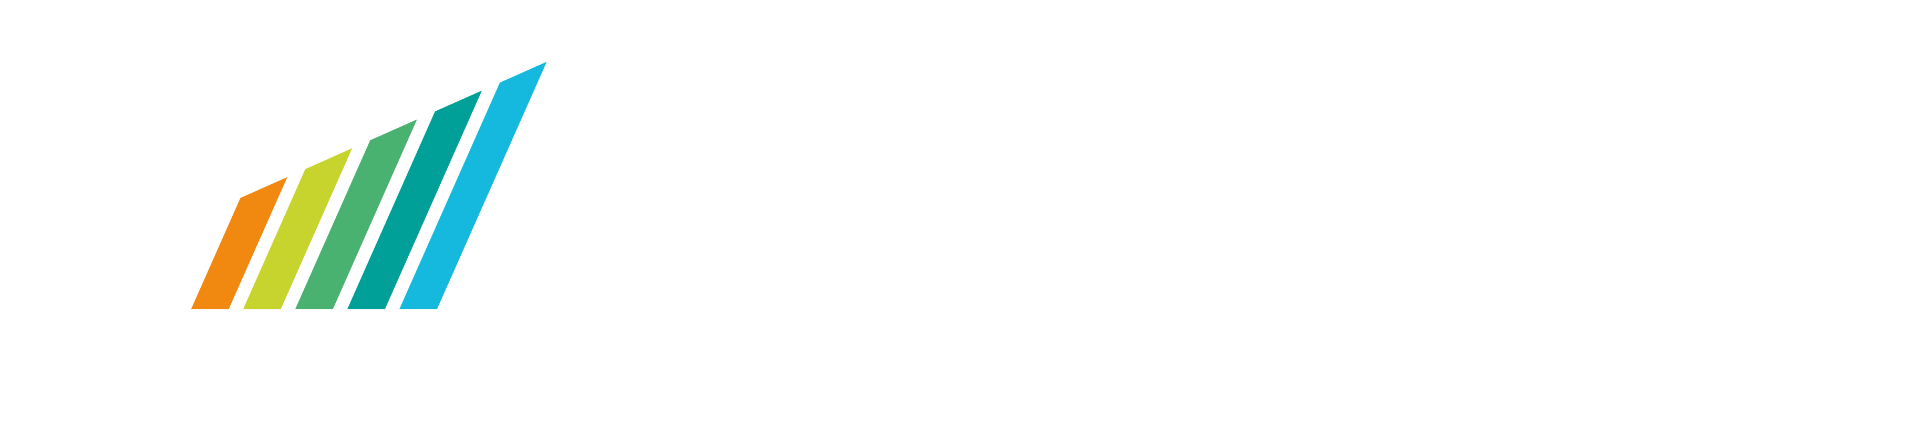 Wessex Digital Infrastructure Accelerator